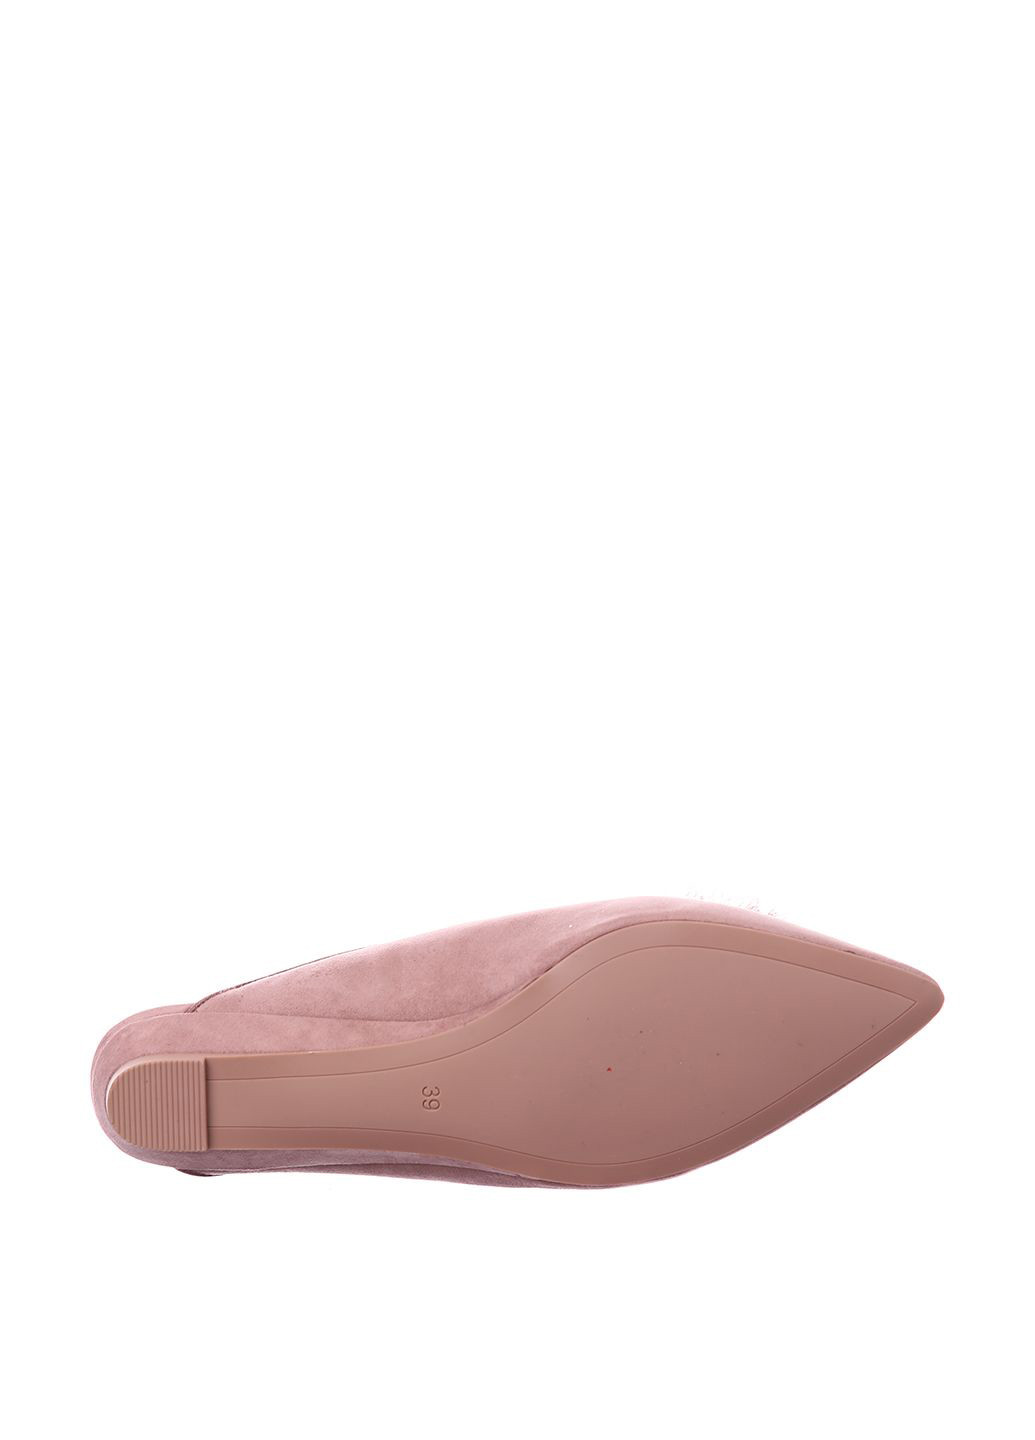 Розовые сабо H&M без каблука с помпонами